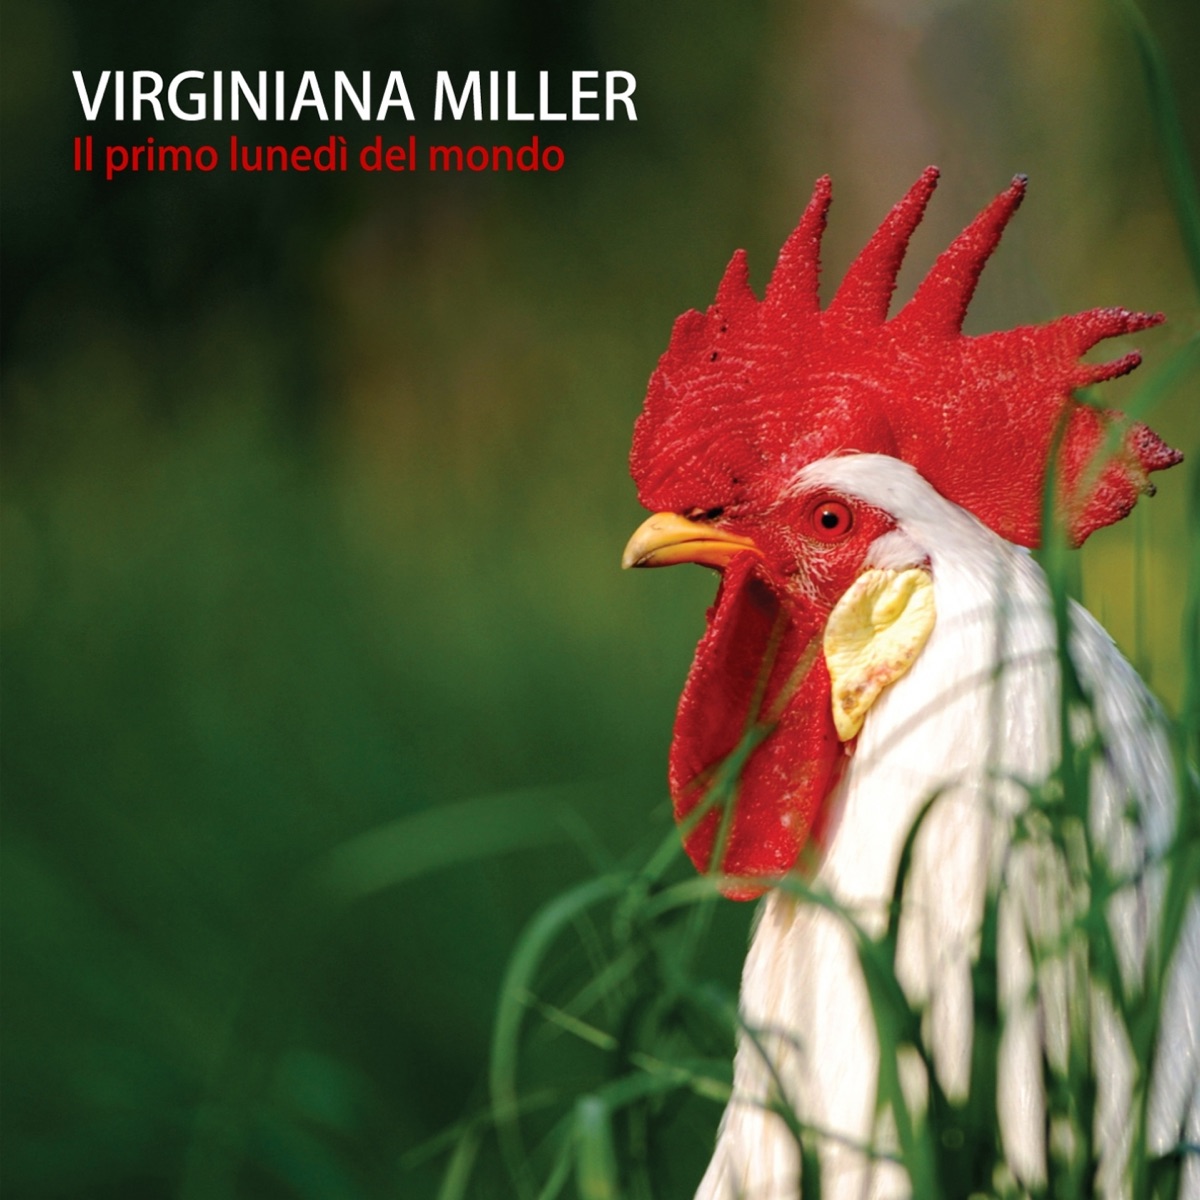 La verità sul tennis - Album di Virginiana Miller - Apple Music